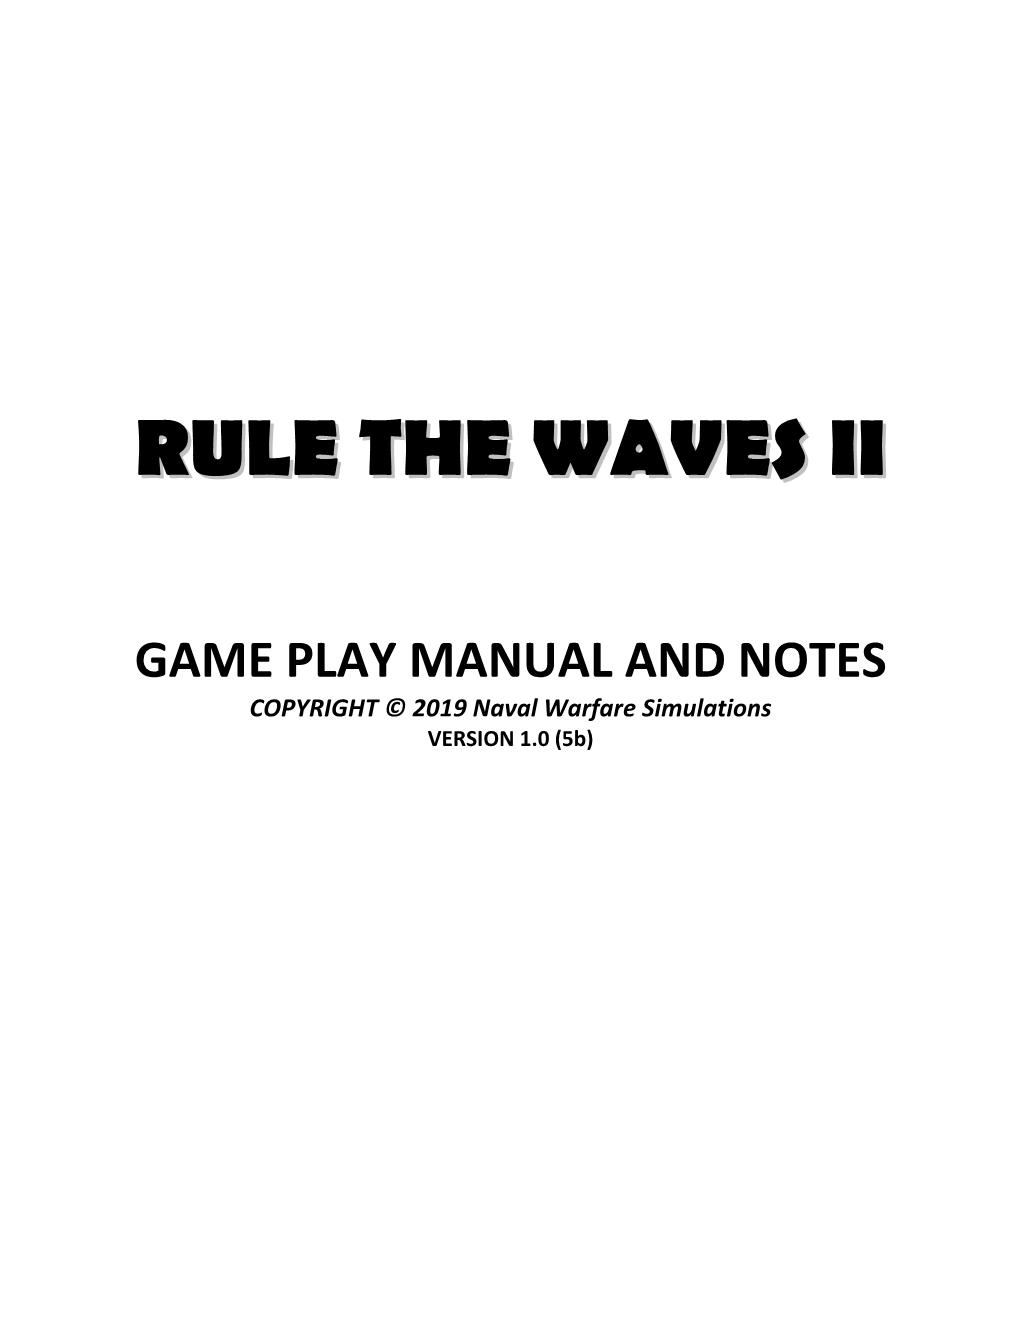 Rule the Waves Ii'